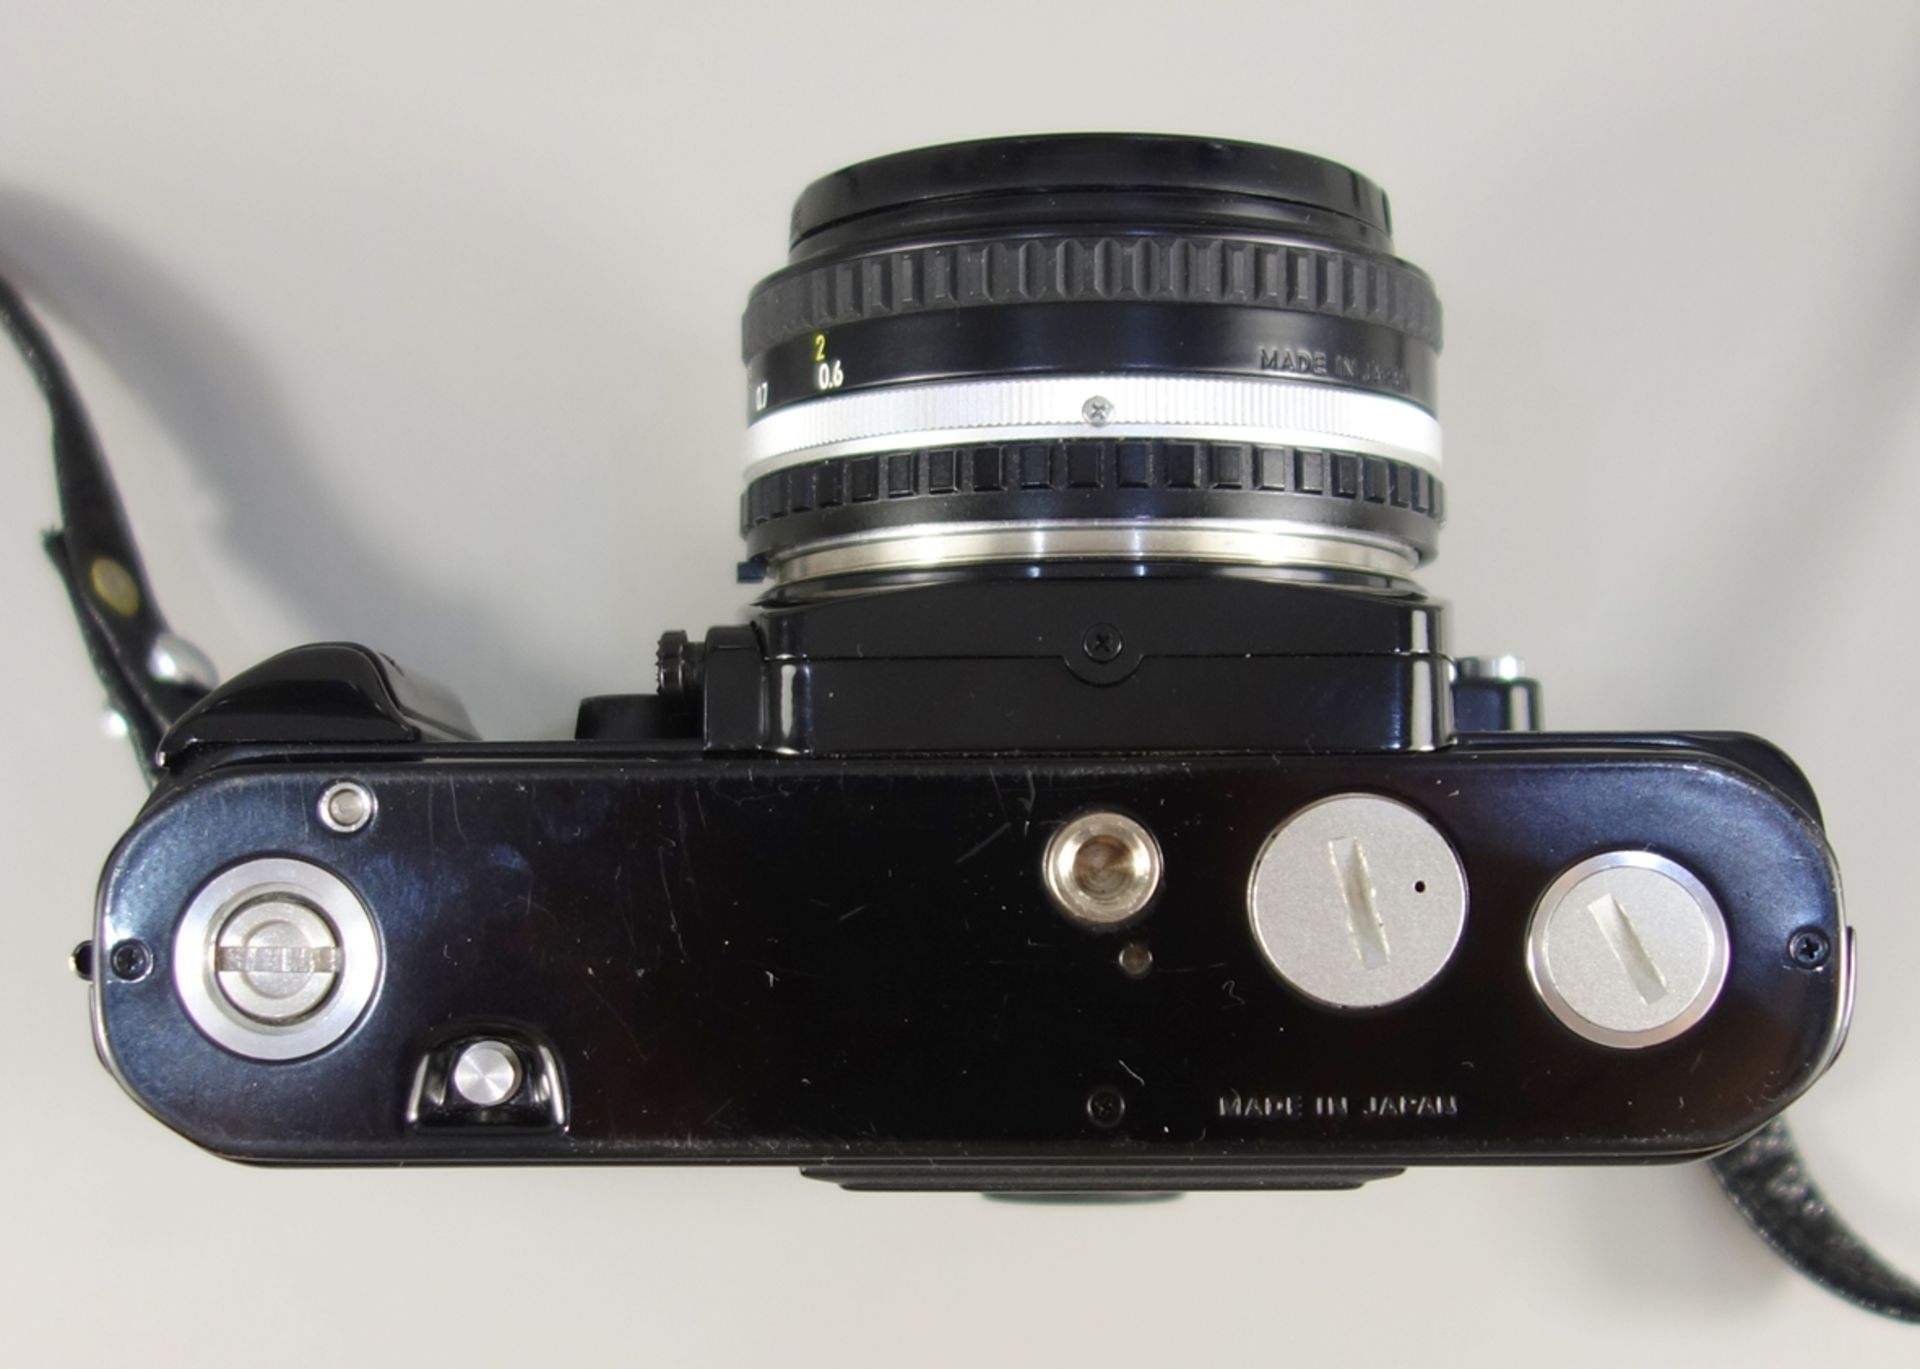 Nikon FA, Spiegelreflexkamera, schwarz, Serien-Nr. 5162031, mit Objektiv Nikon Lens Series E, 50mm - Bild 4 aus 4